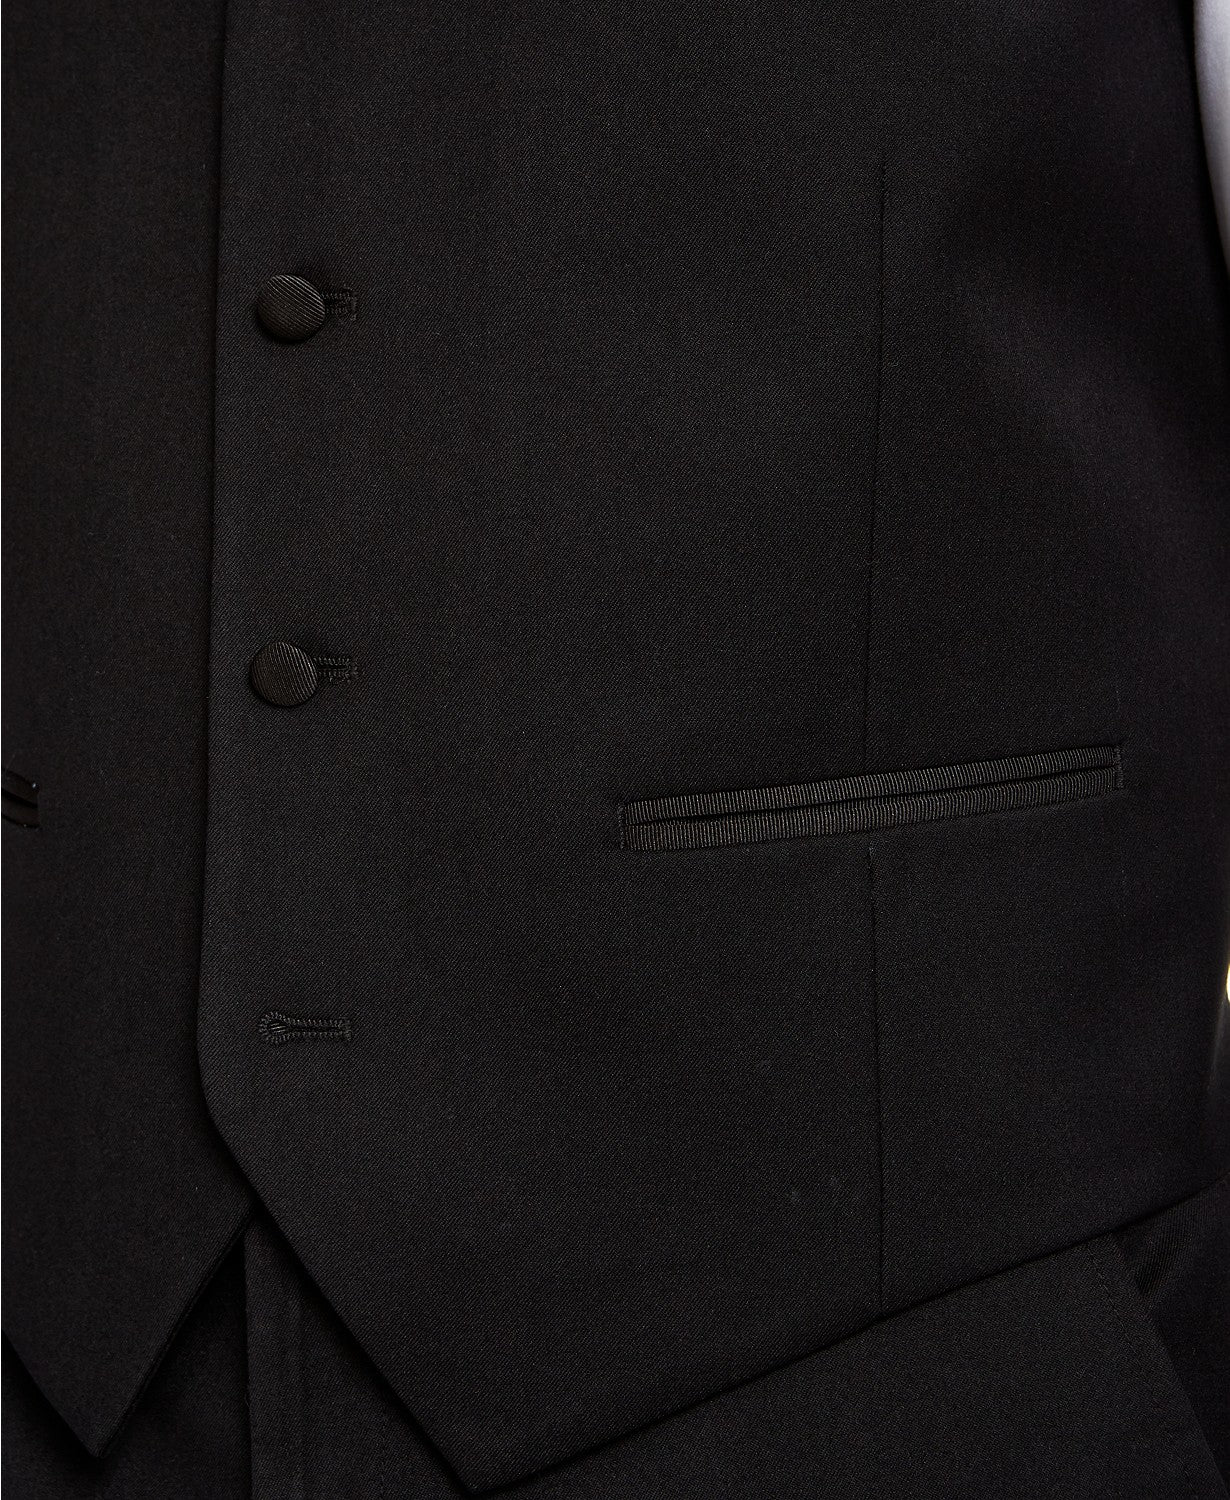 Alfani Men's Classic-Fit Stretch Black Tuxedo Vest Small